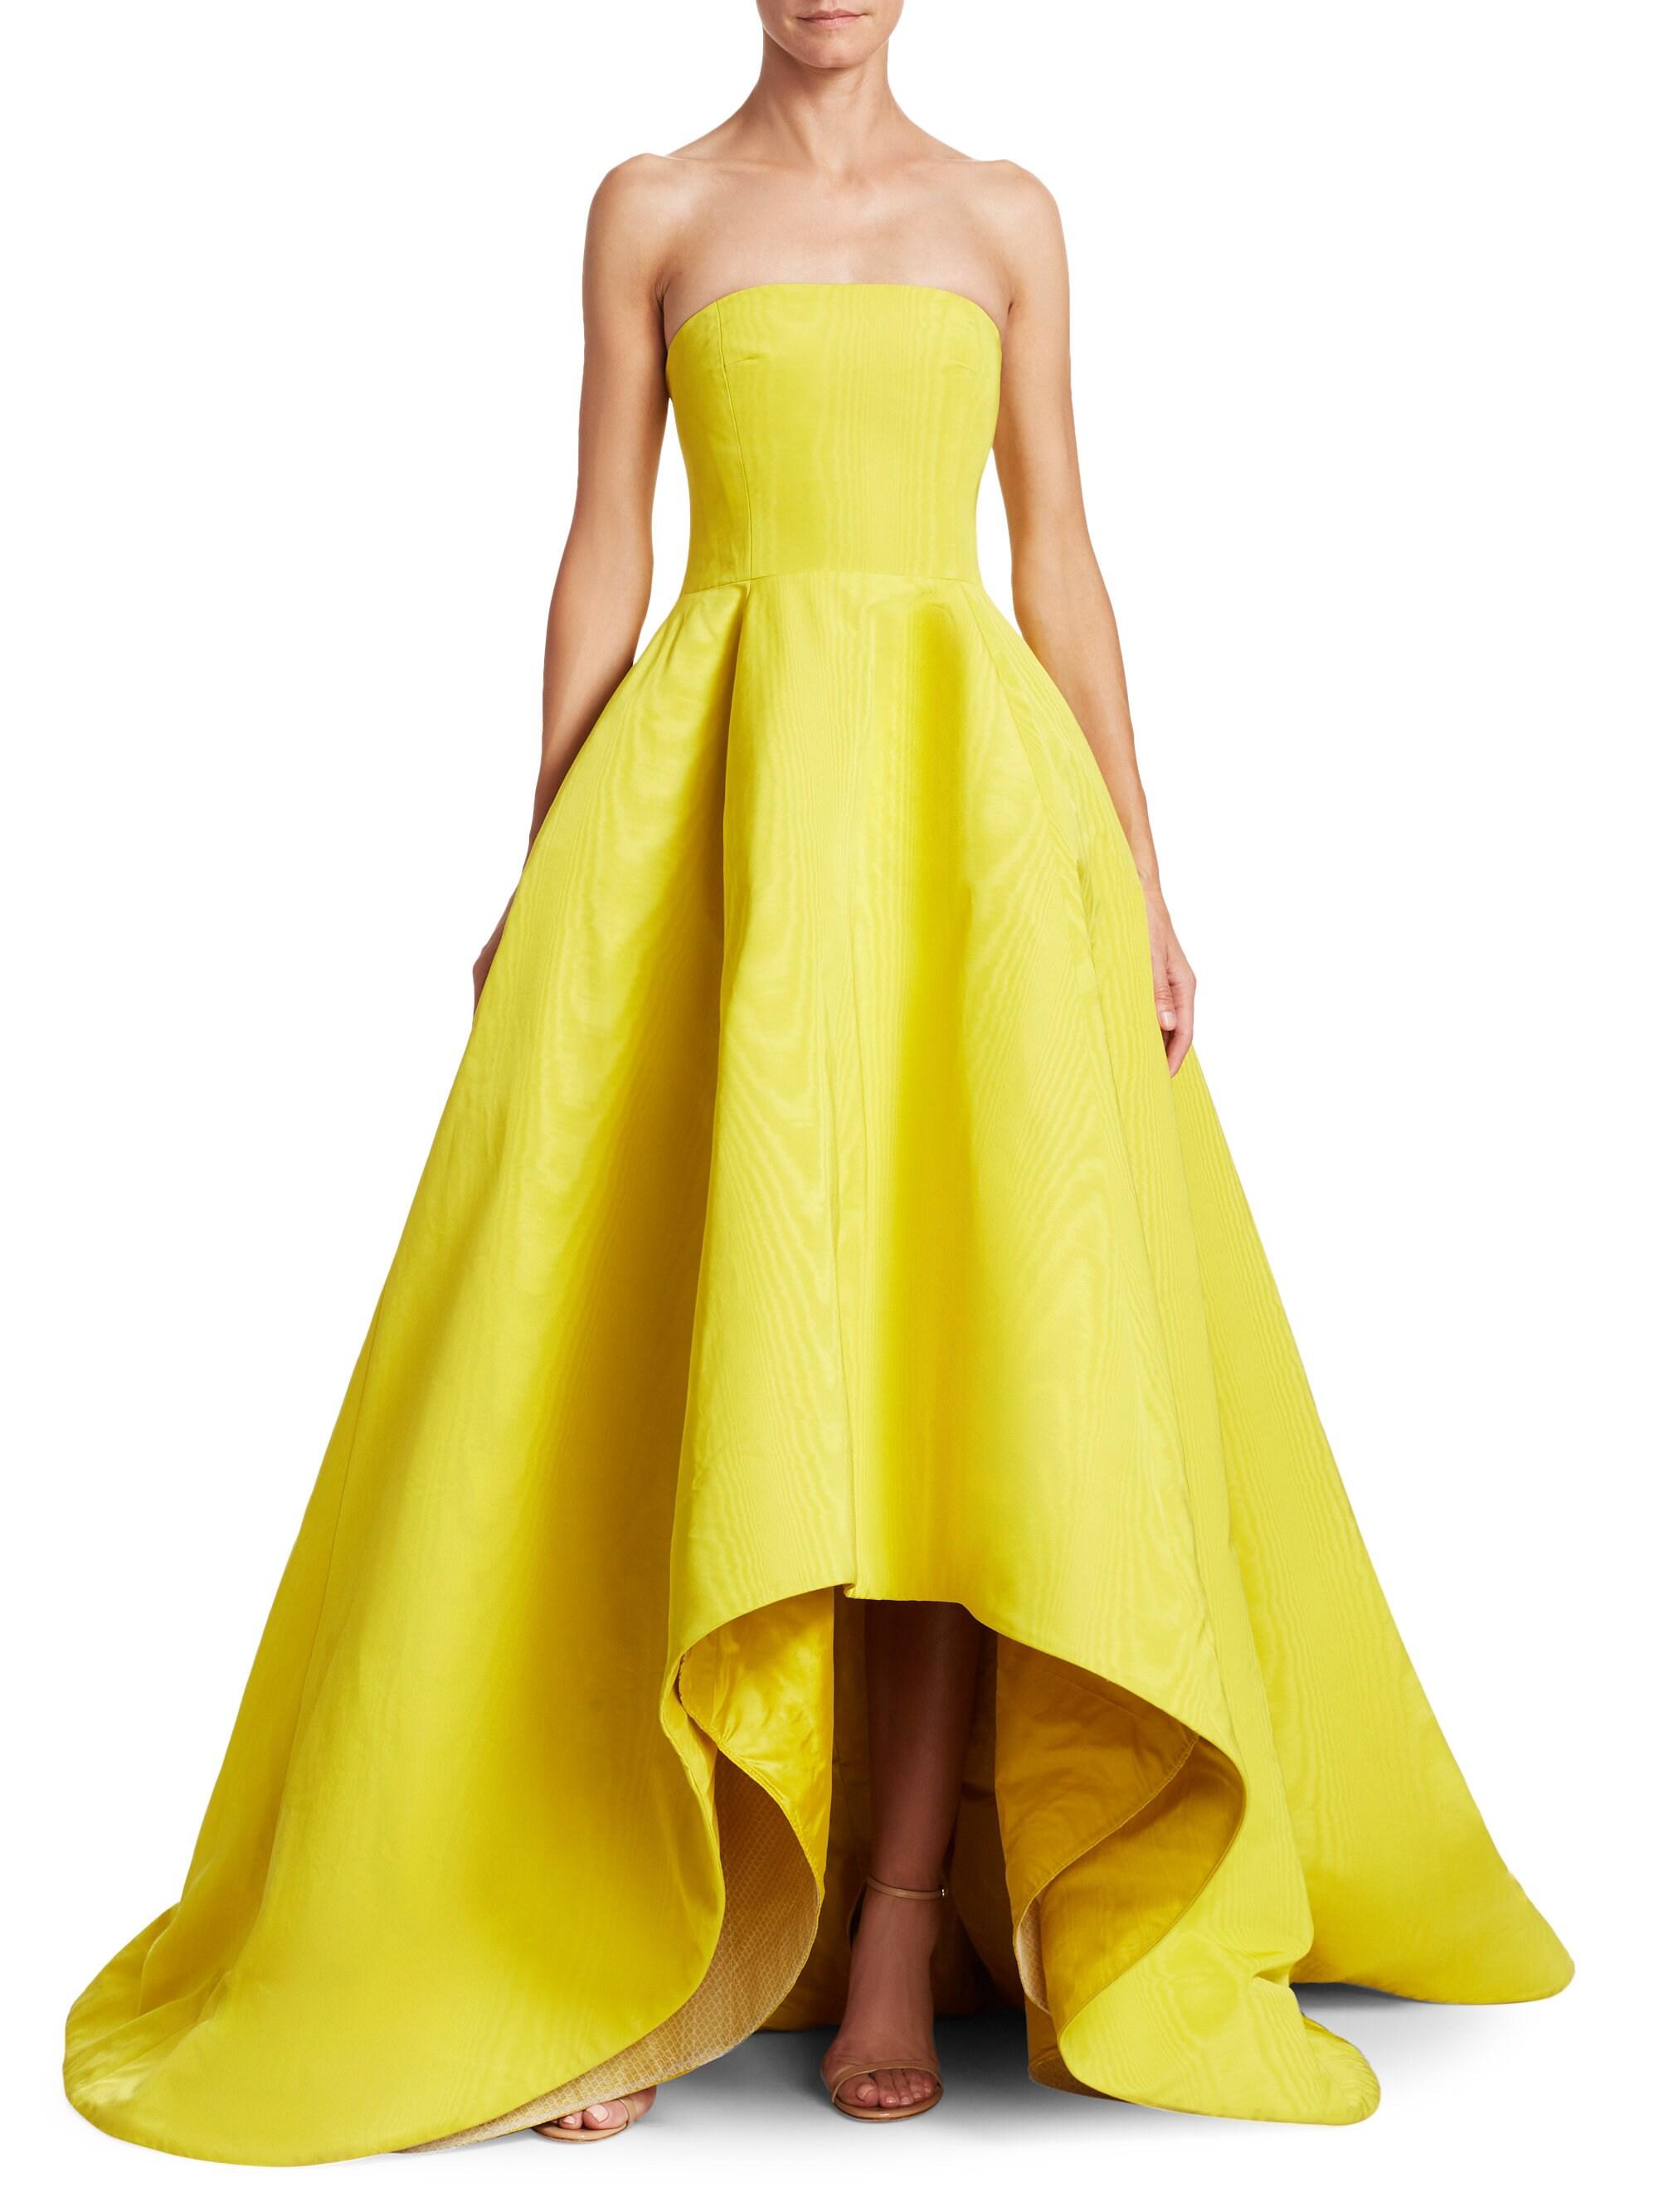 Oscar de la Renta Satin Strapless High-low Ball Gown in Yellow - Lyst